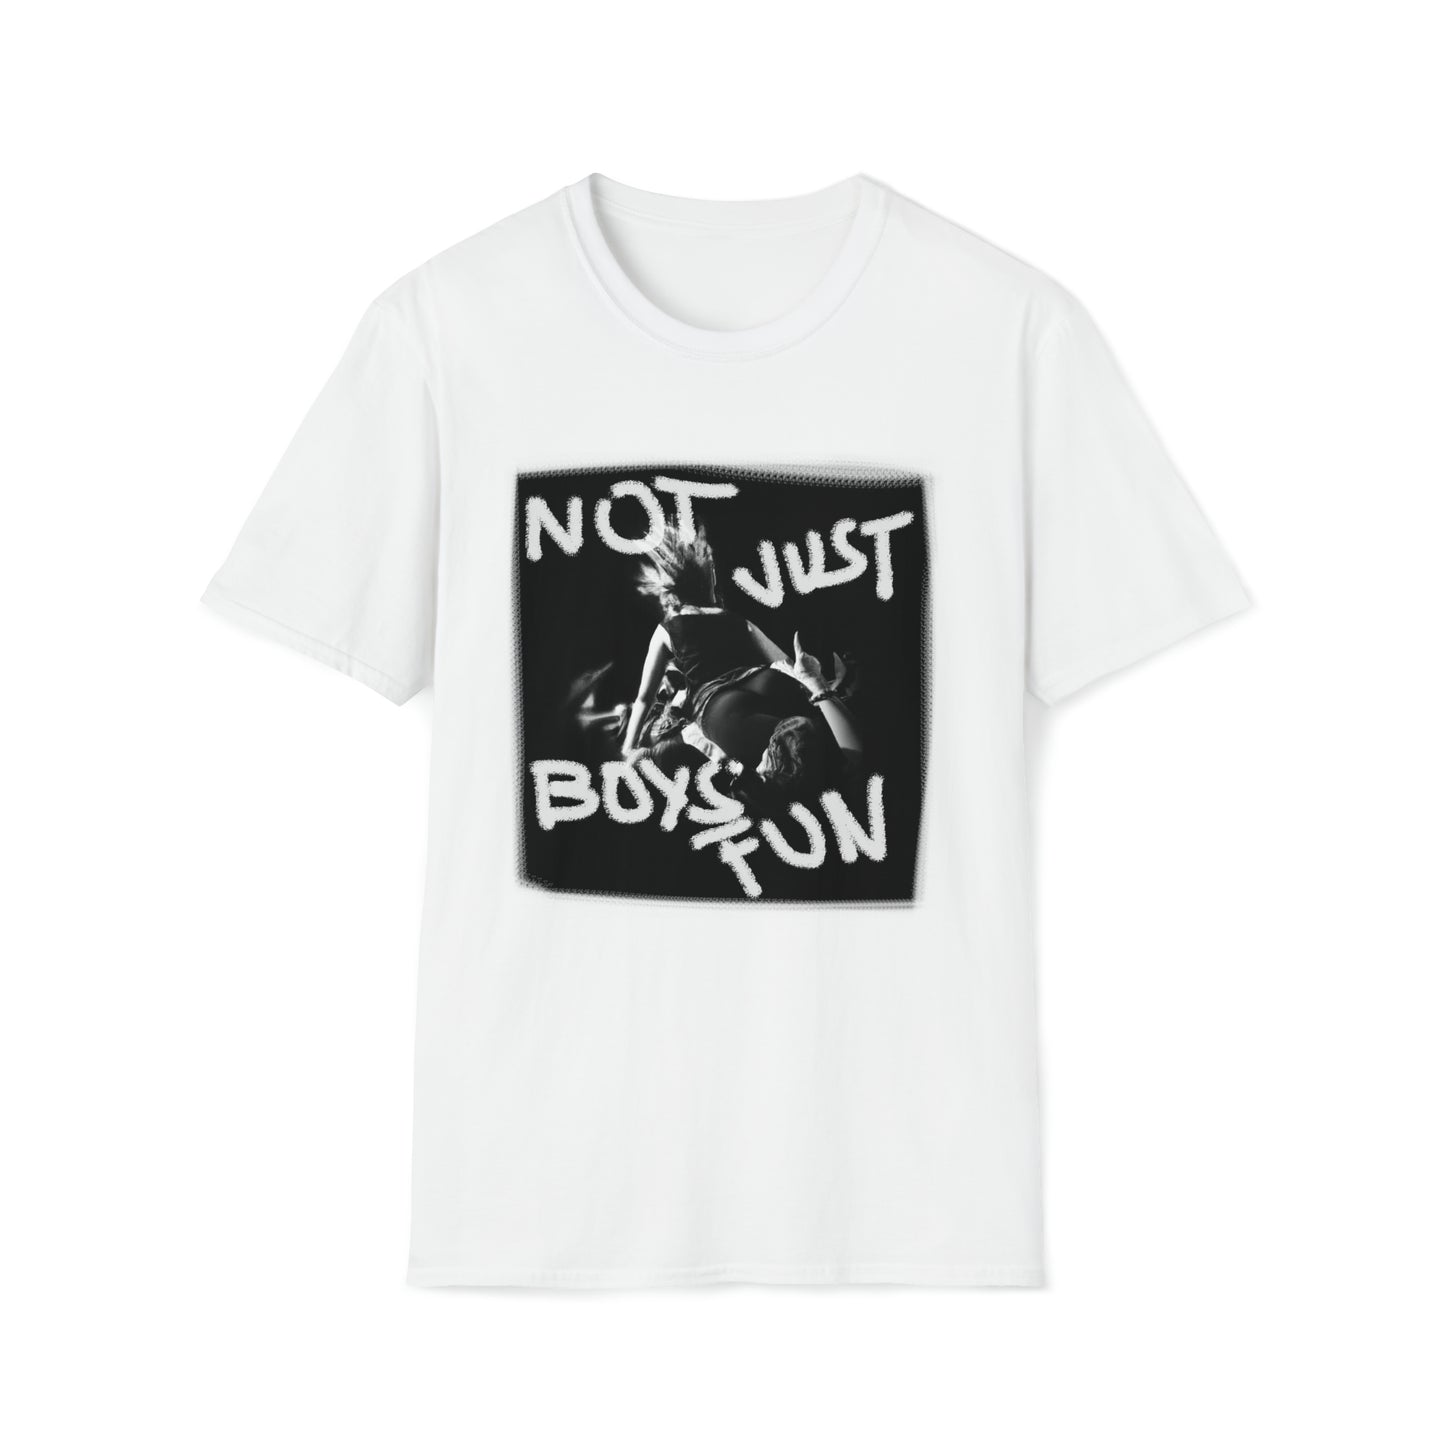 Not Just Boys' Fun Unisex T-Shirt